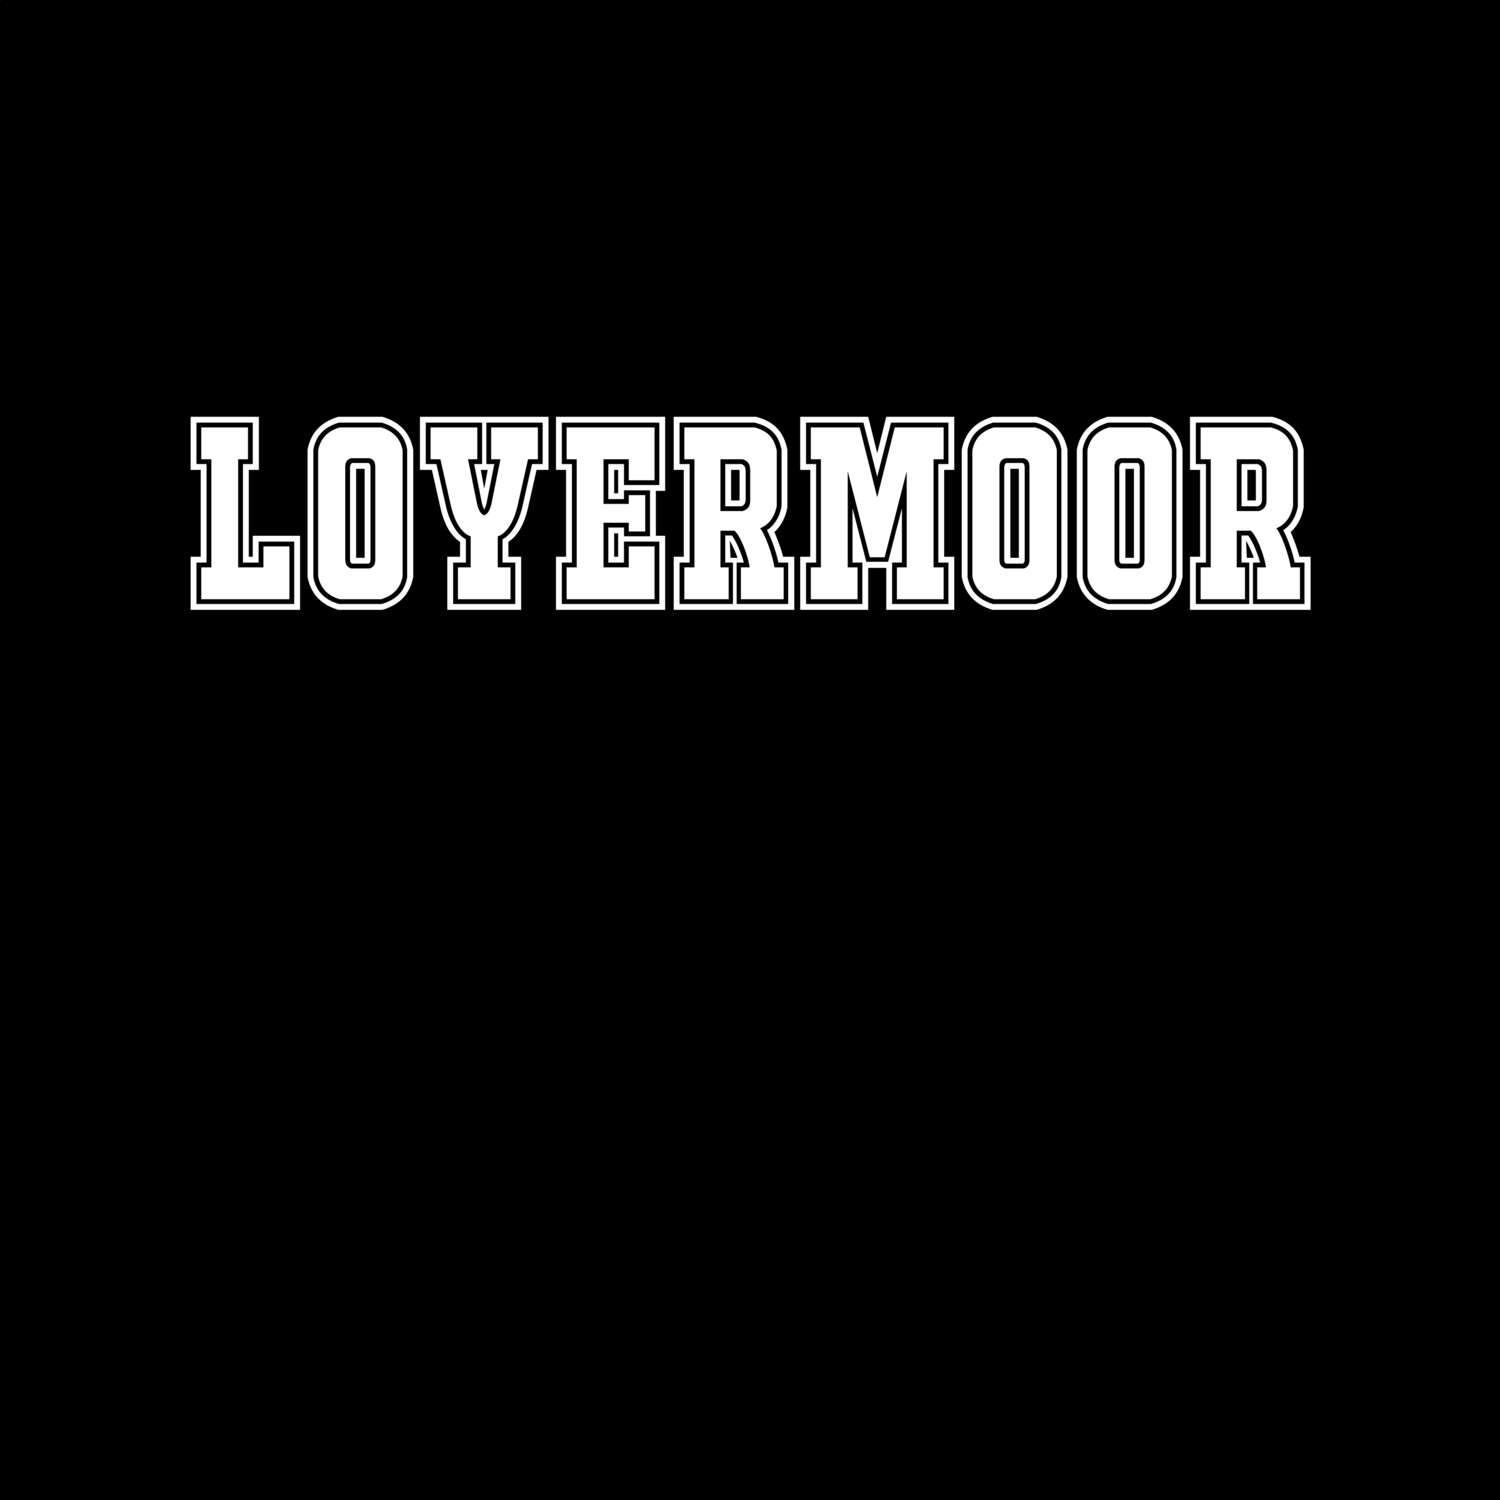 Loyermoor T-Shirt »Classic«